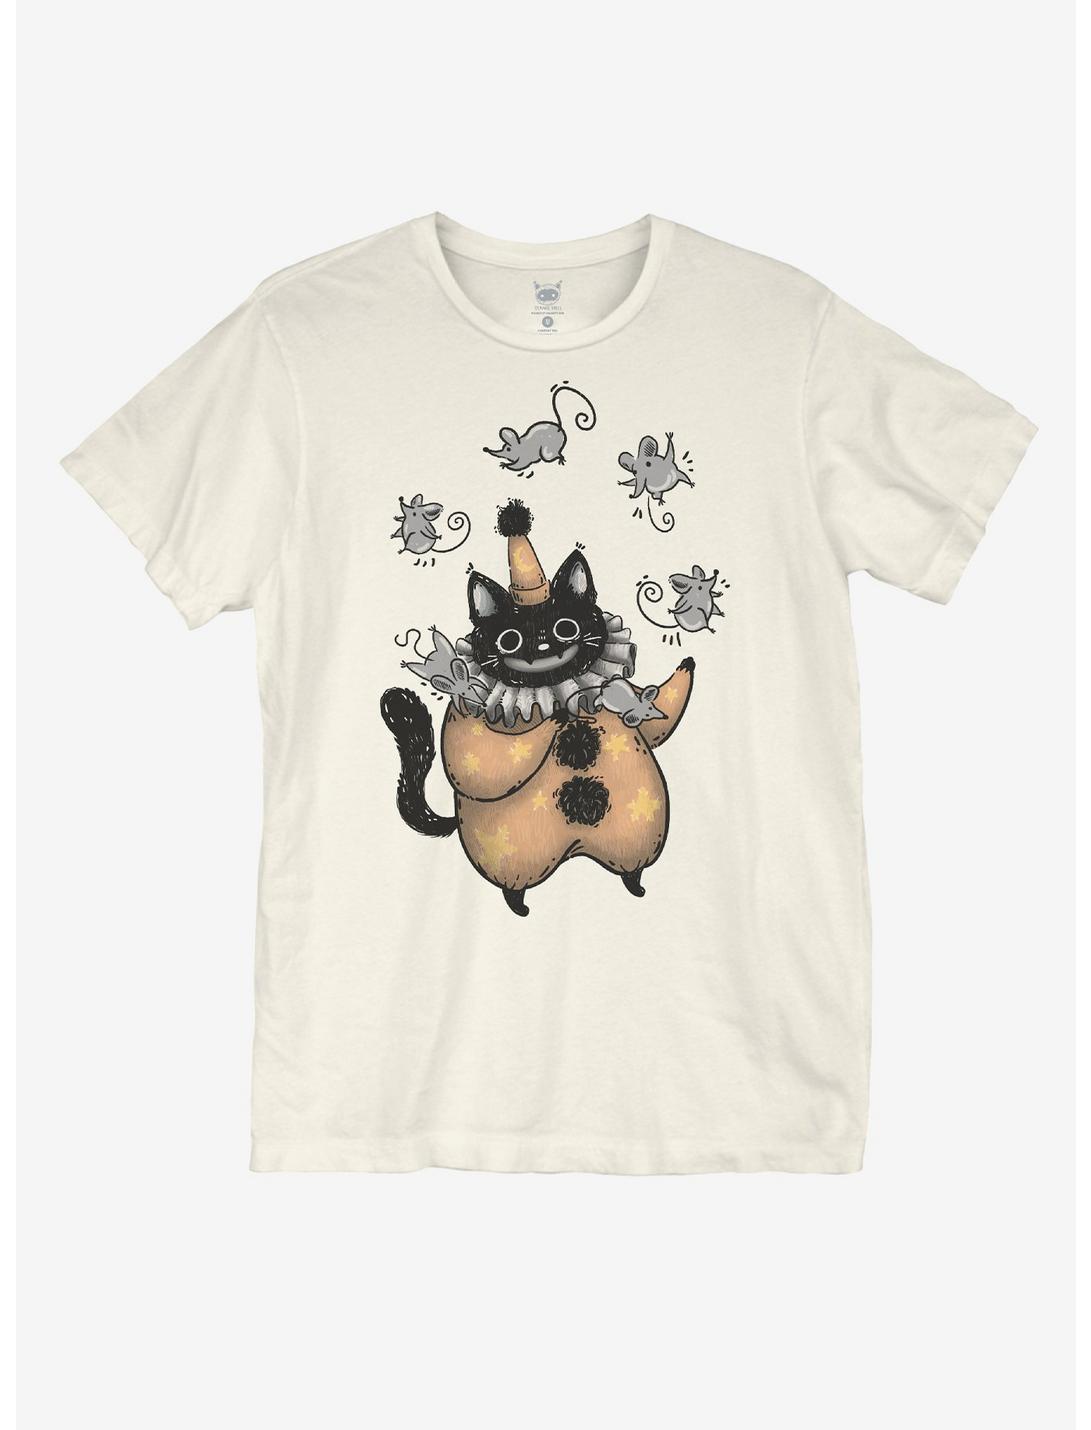 Clown Cat T-Shirt By Guild Of Calamity, MULTI, hi-res